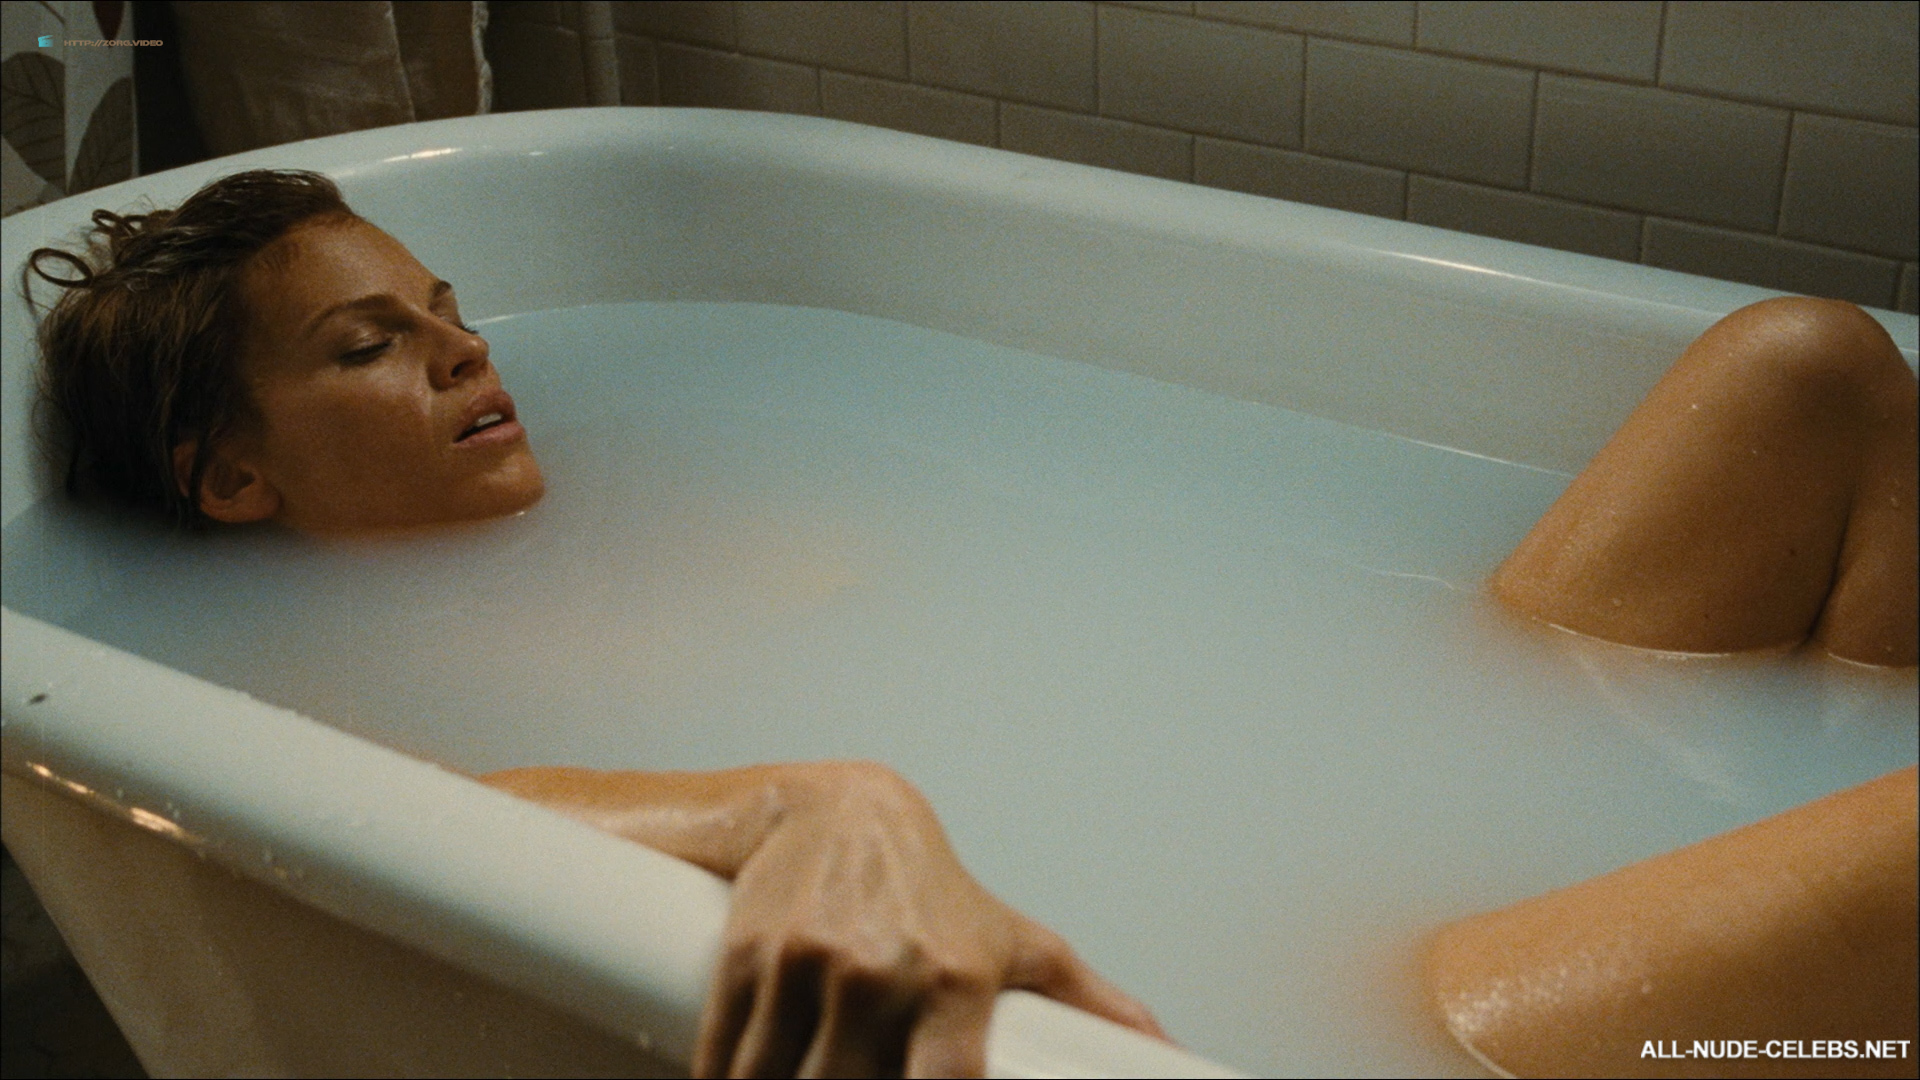 Hilary Swank naked movie scenes.